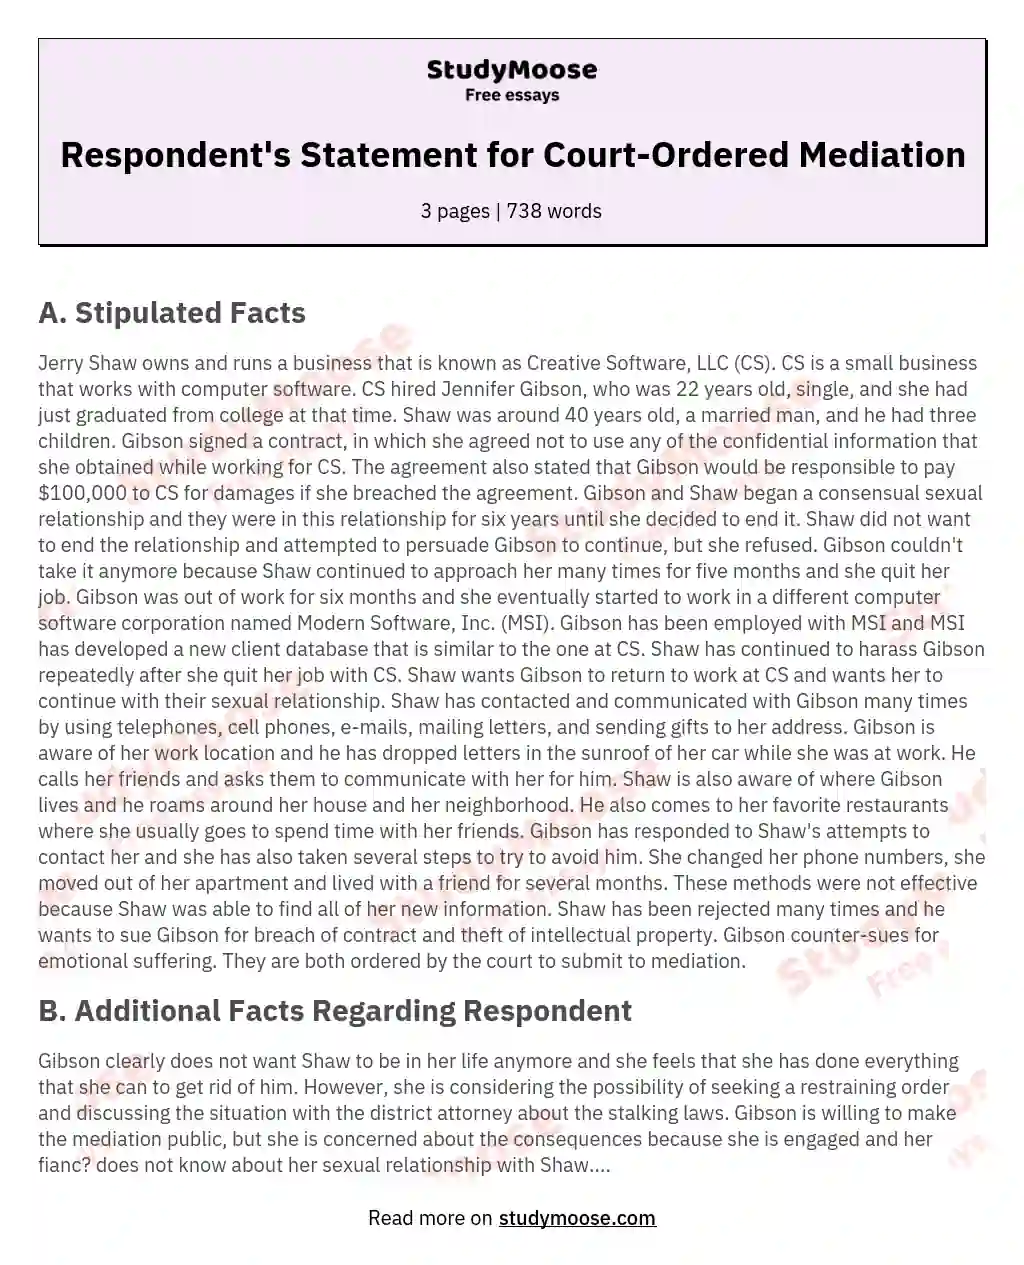 Respondent's Statement for Court-Ordered Mediation essay